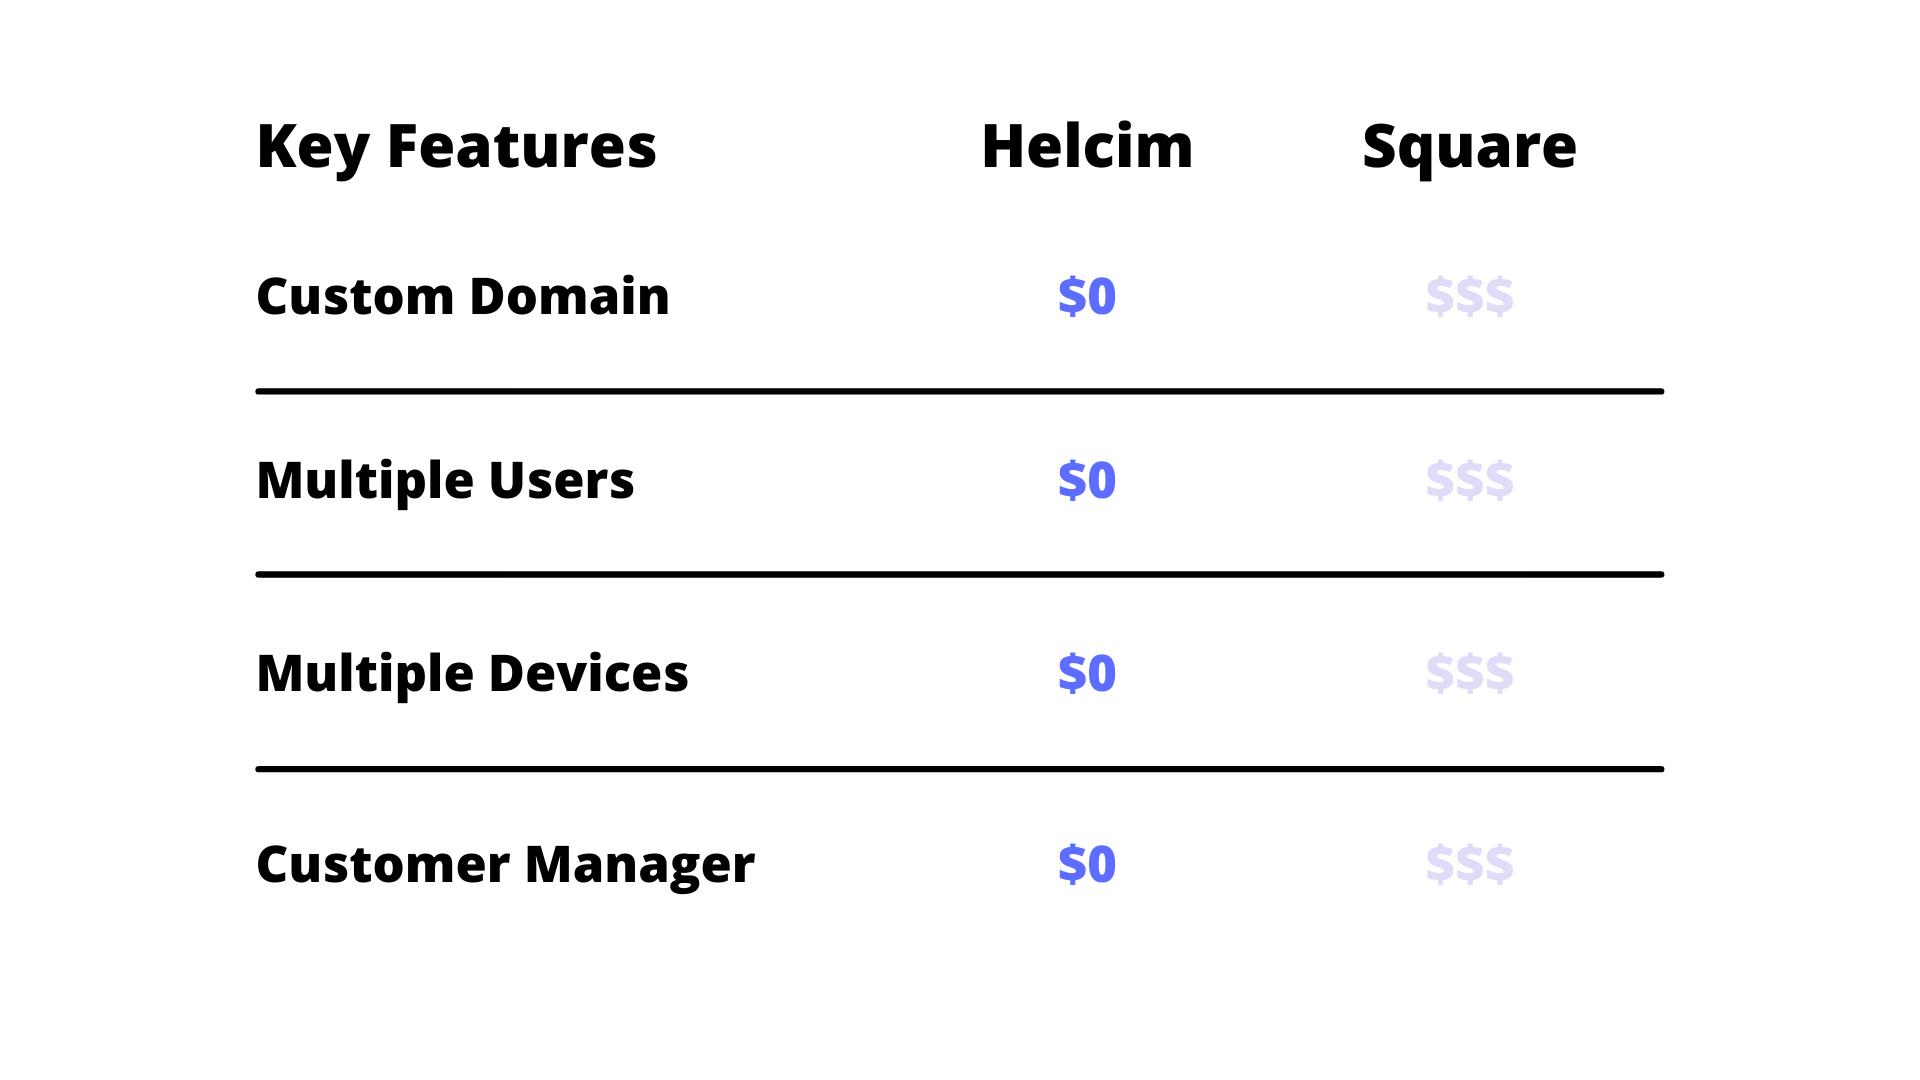 Helcim vs Square key features comparisson